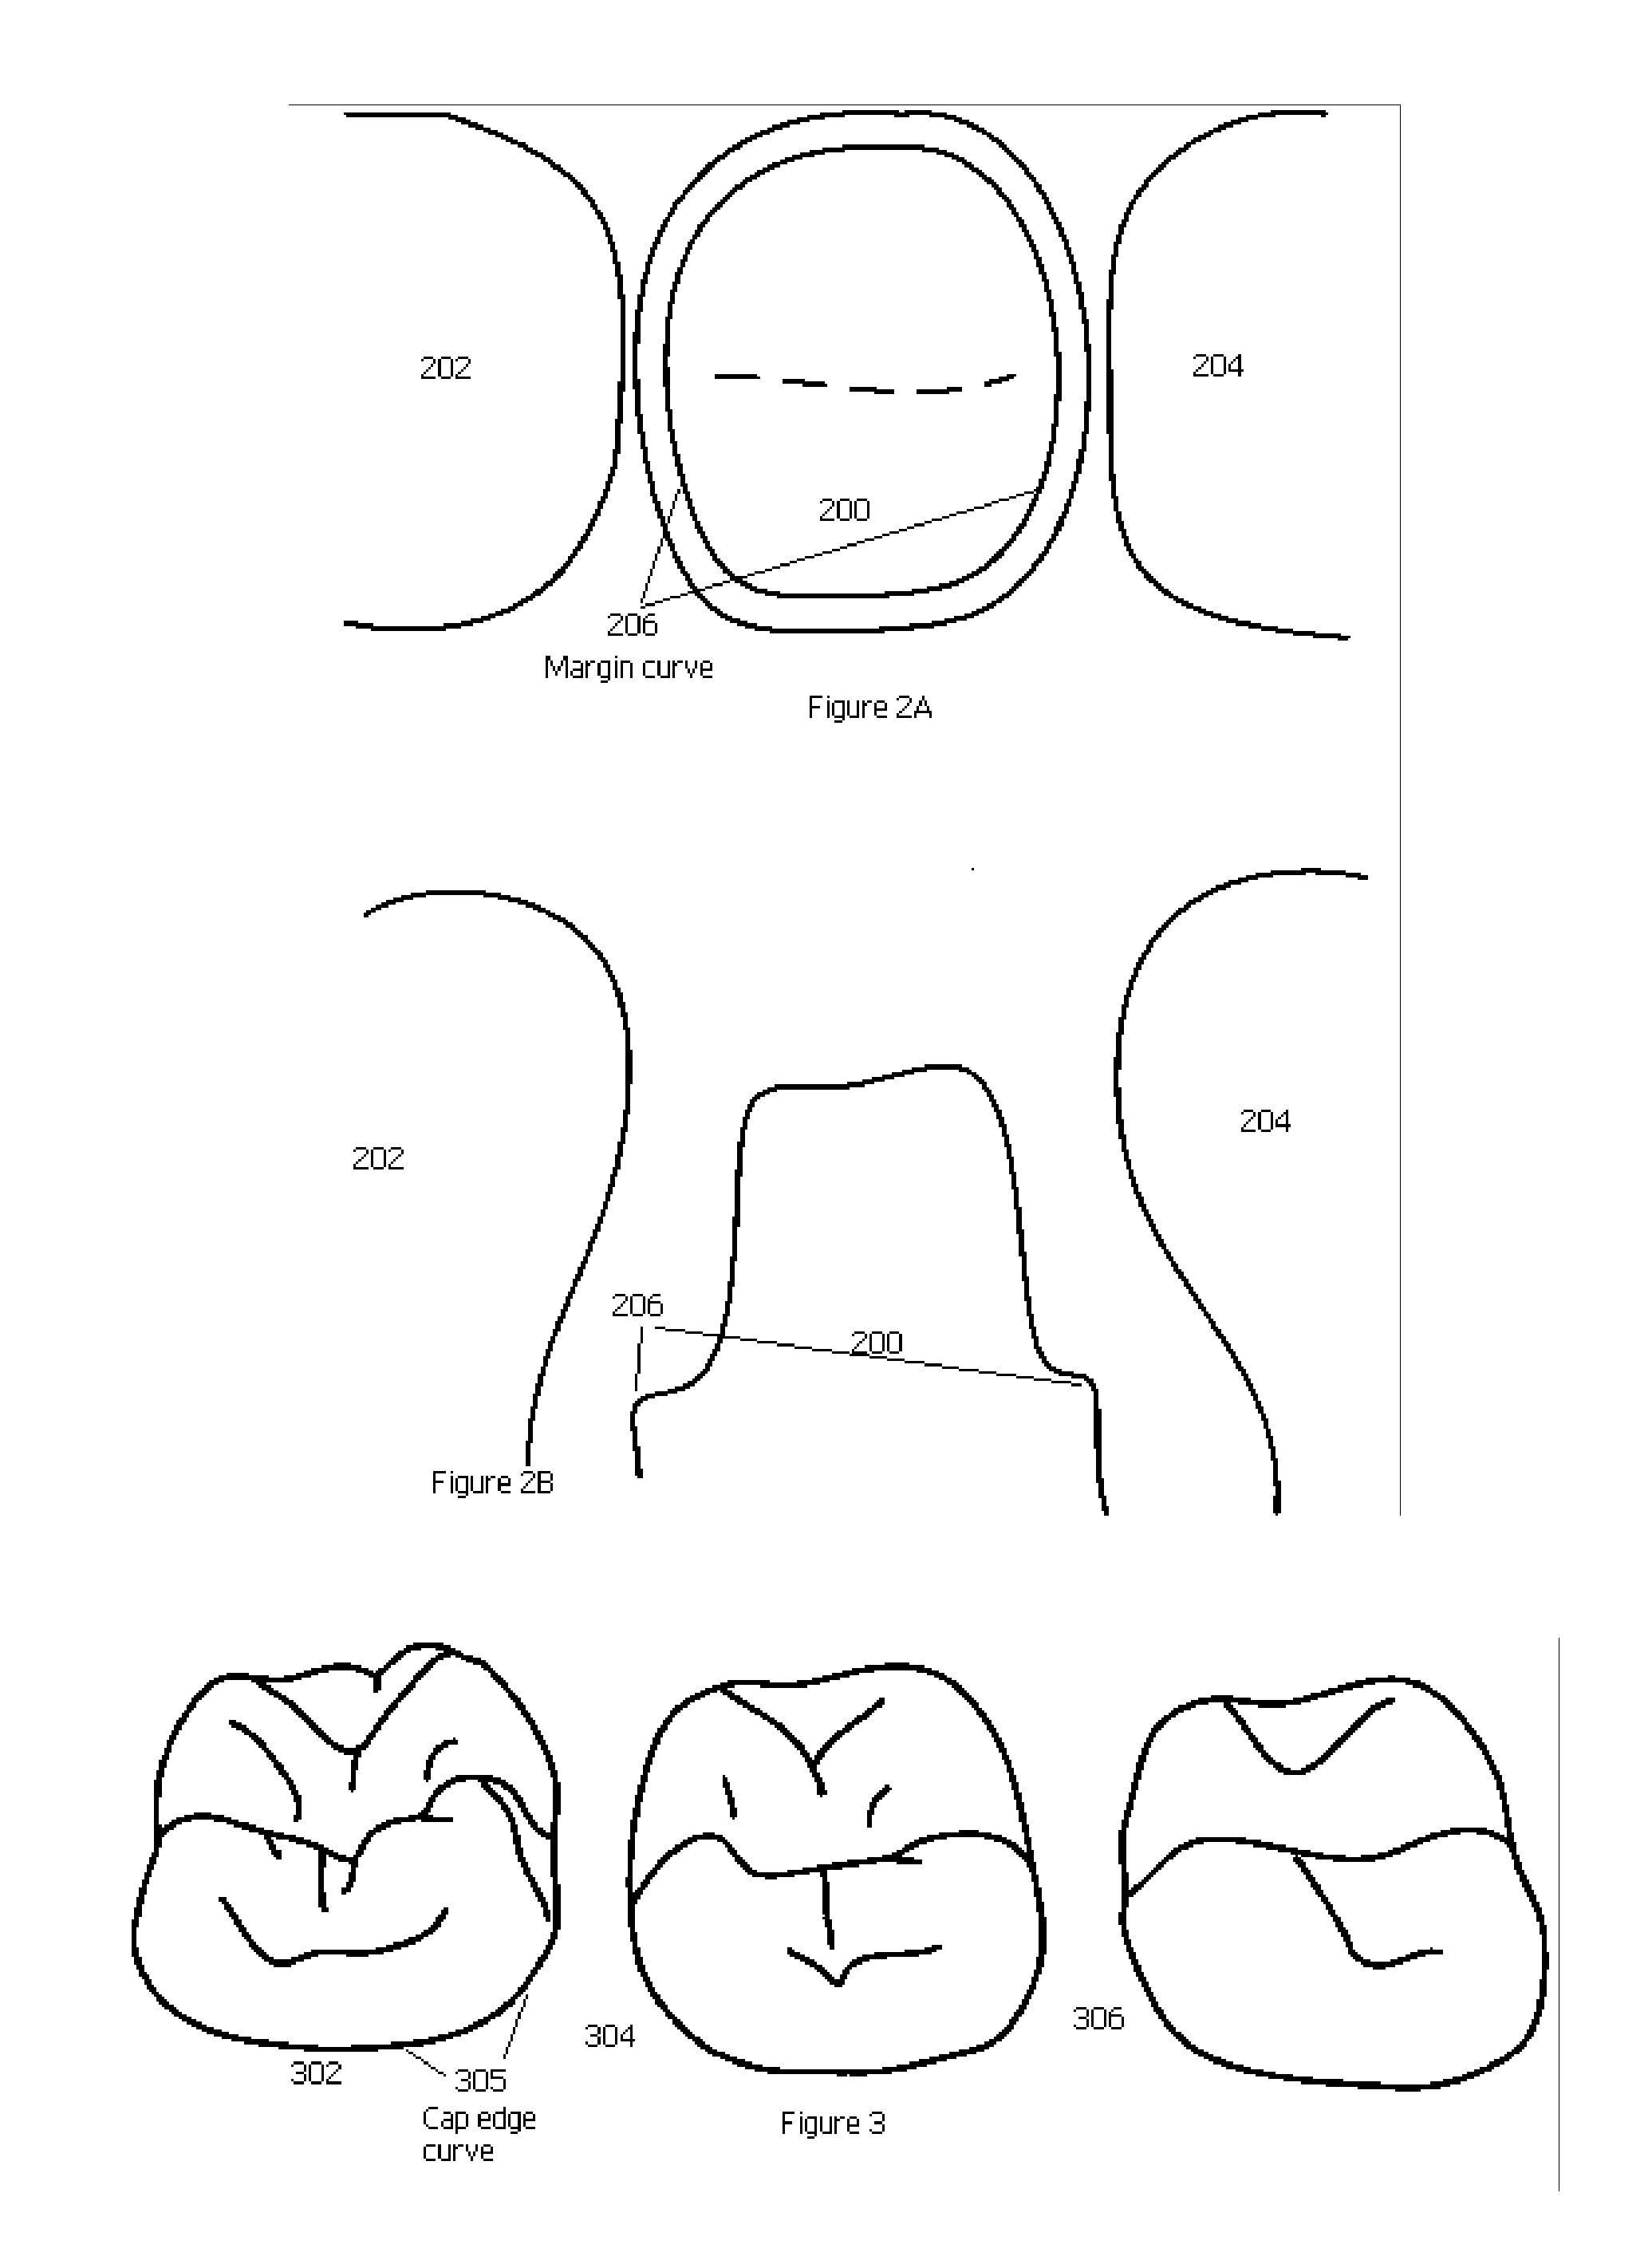 Method and computer system for creating a dental restoration model